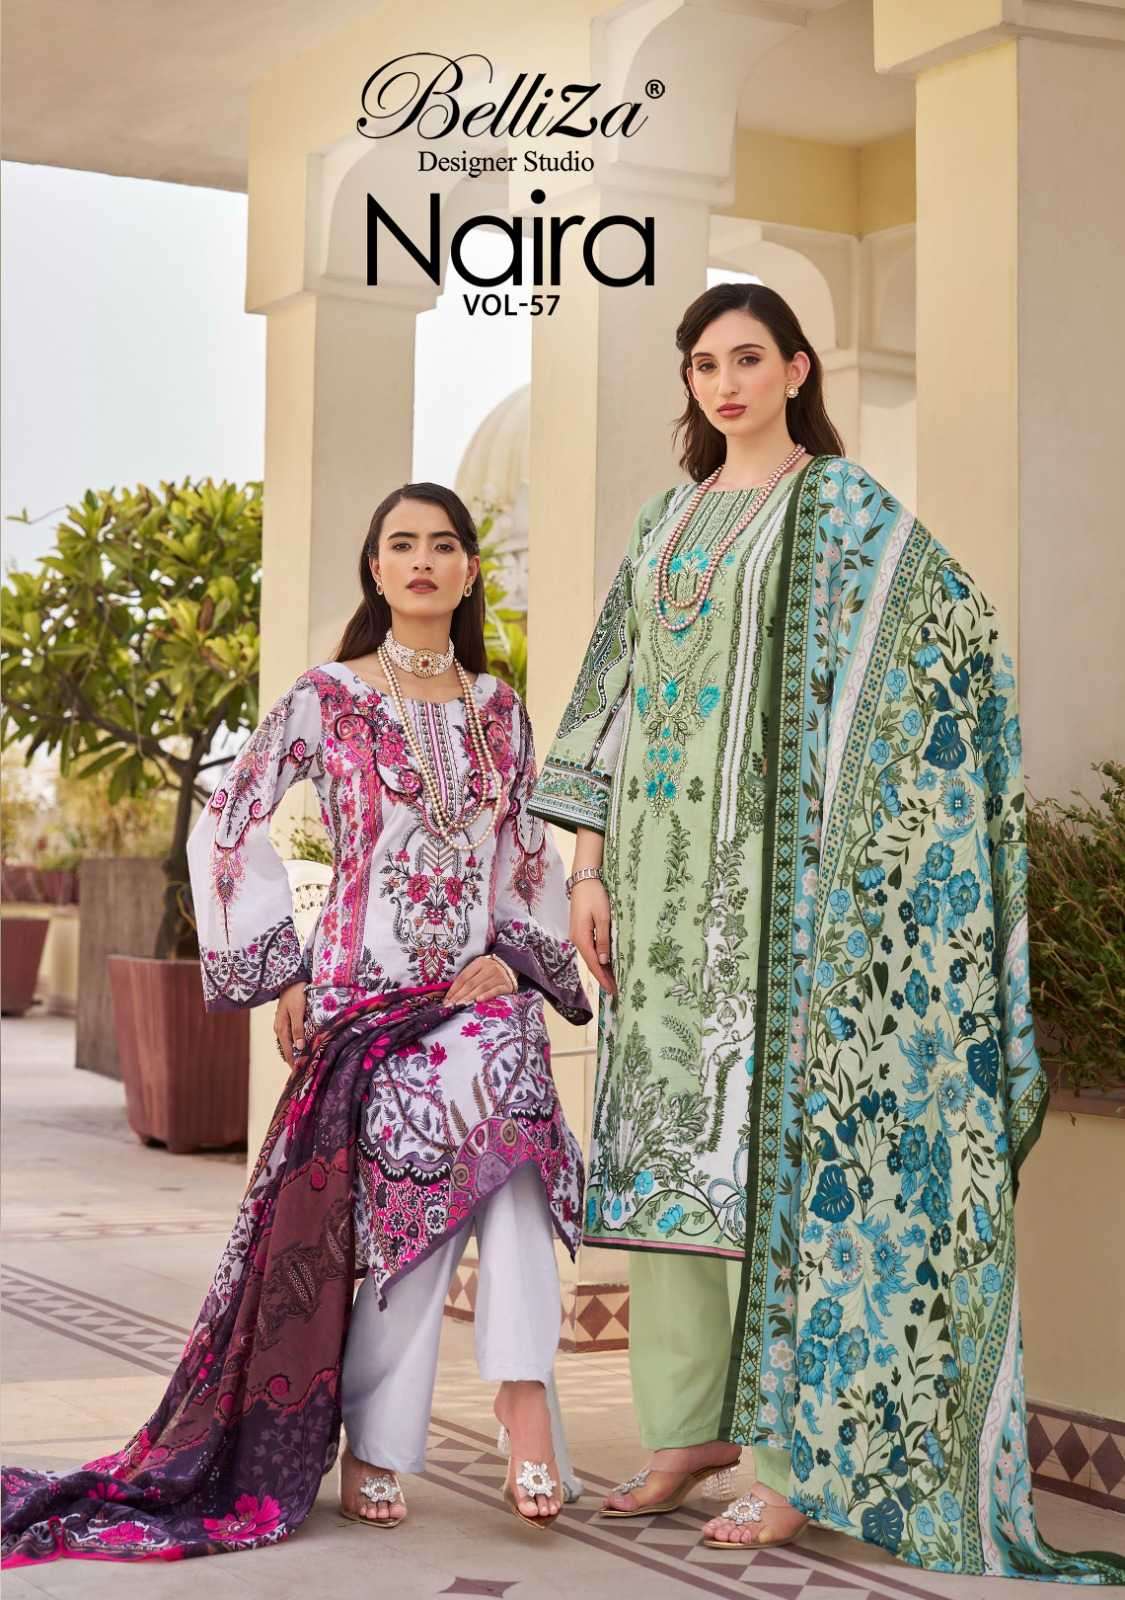 belliza naira vol 57 series 930001-930008 Pure Cotton Digital Prints suit